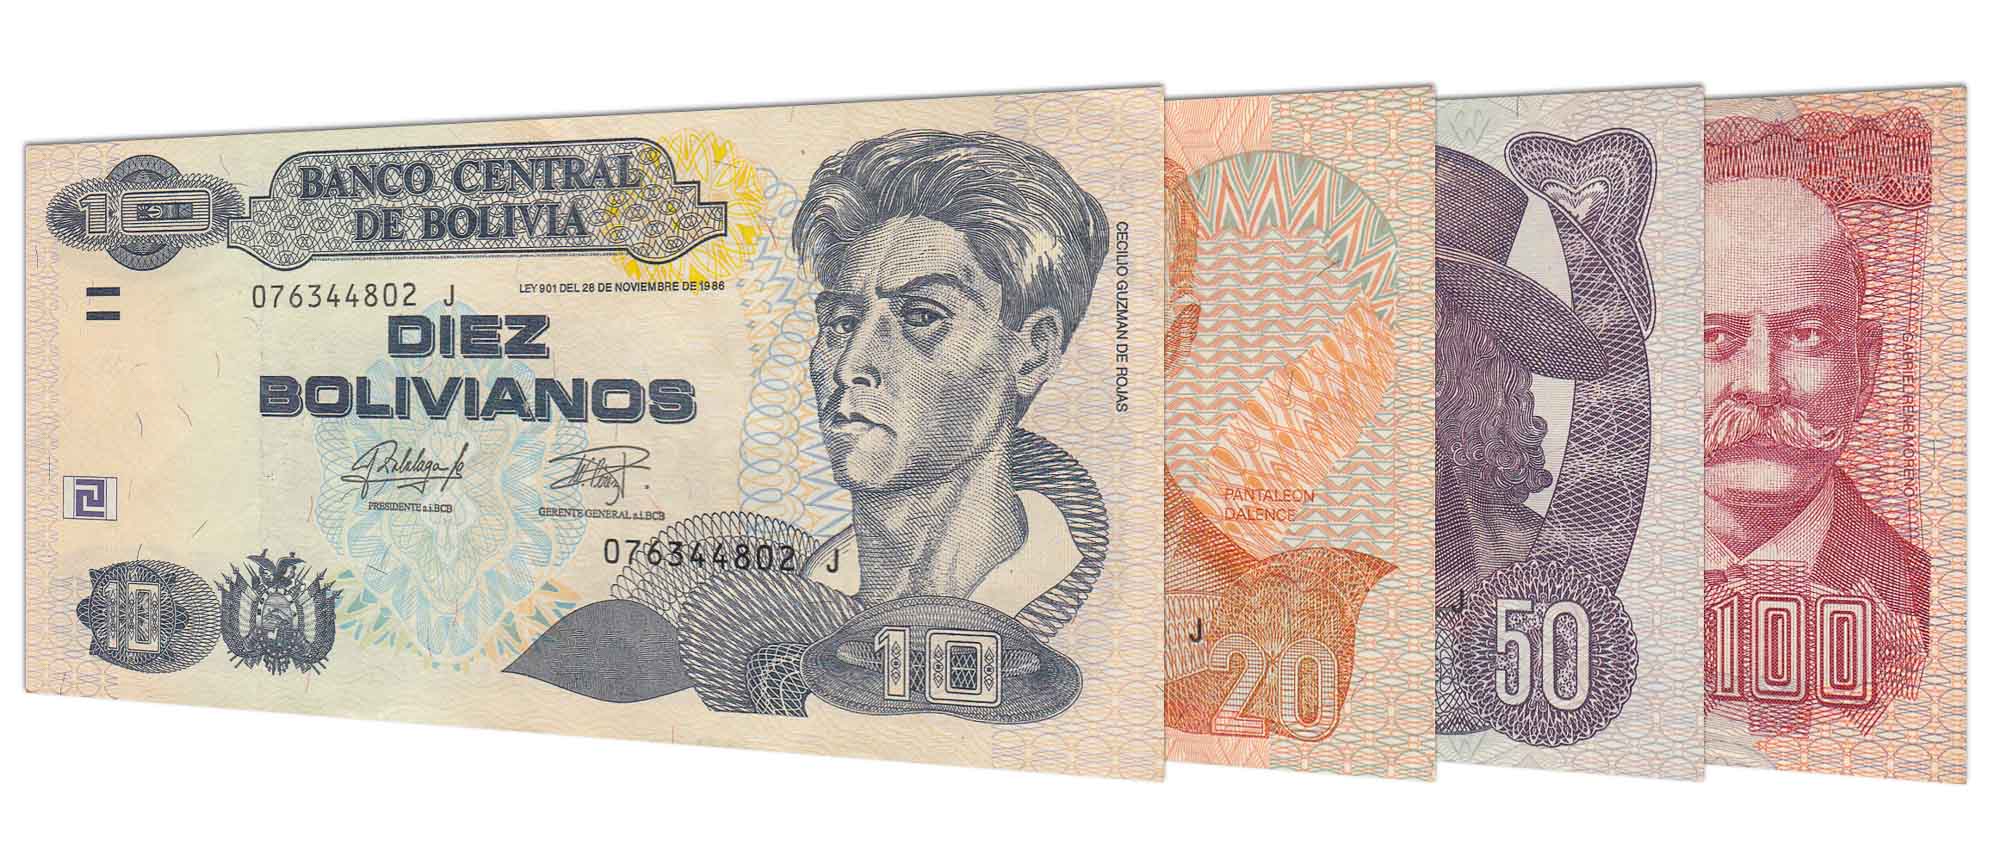 bolivian money